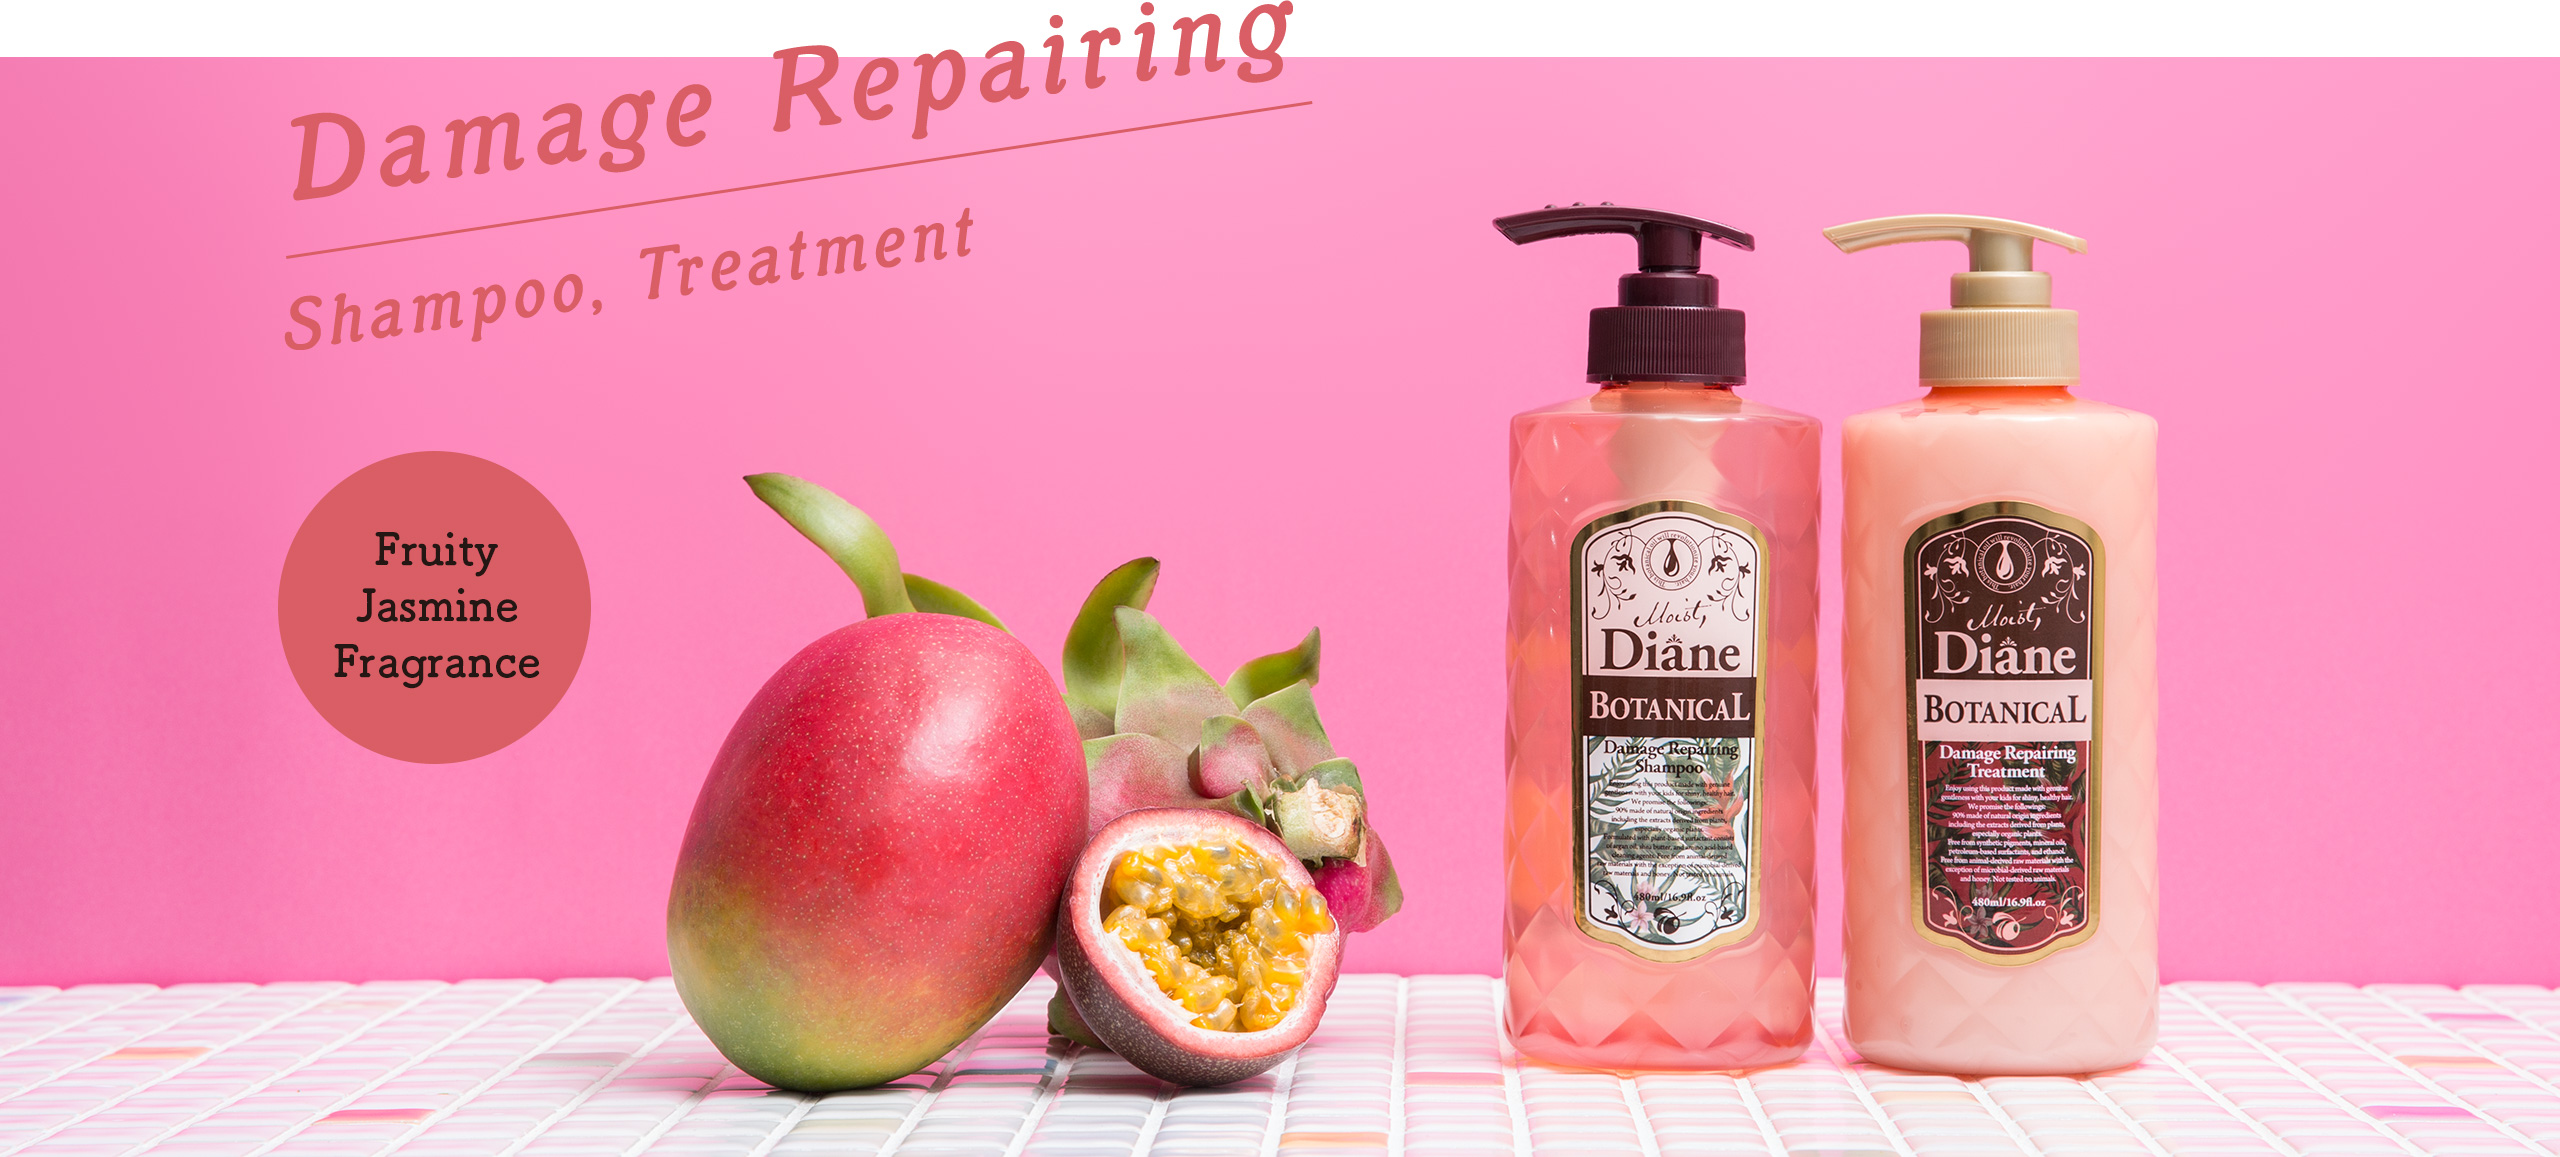 Damage Repairing Shampoo, Treatment Fruity Jasmine Fragrance